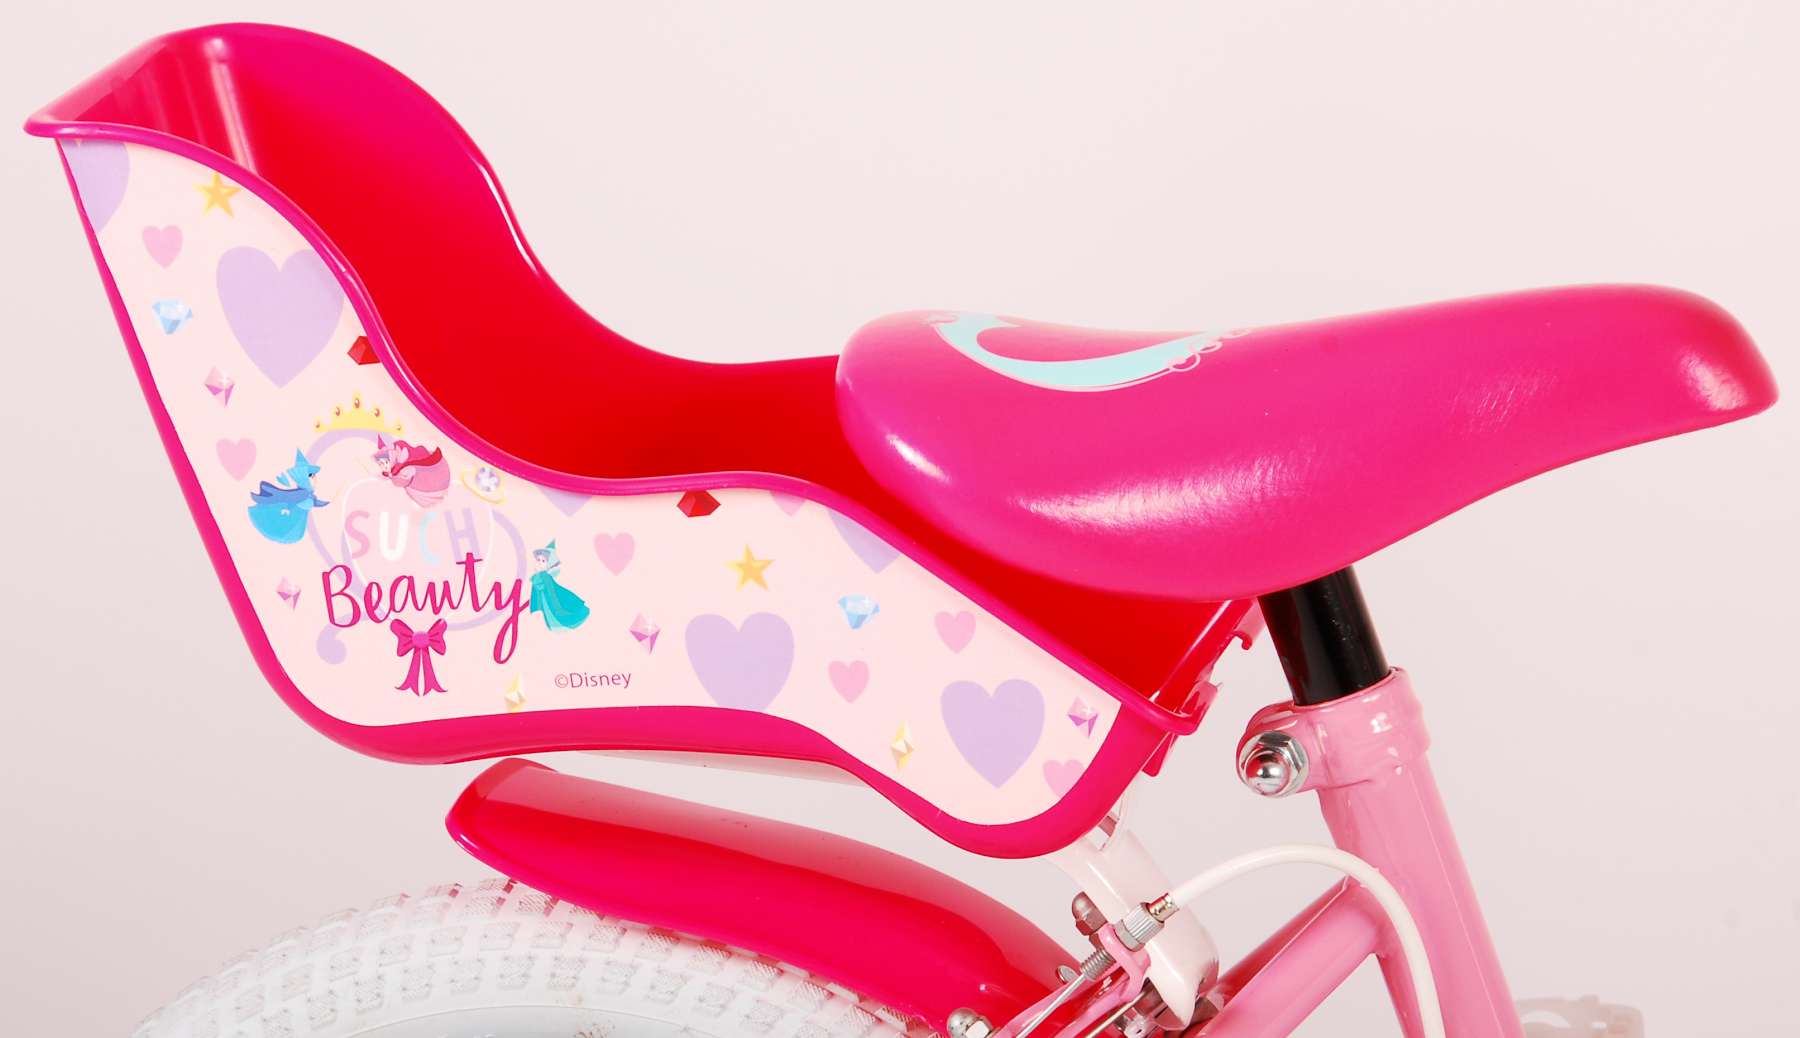 14 Inch Disney Princess Bike Girls Bicycle Kids Beautiful Design 